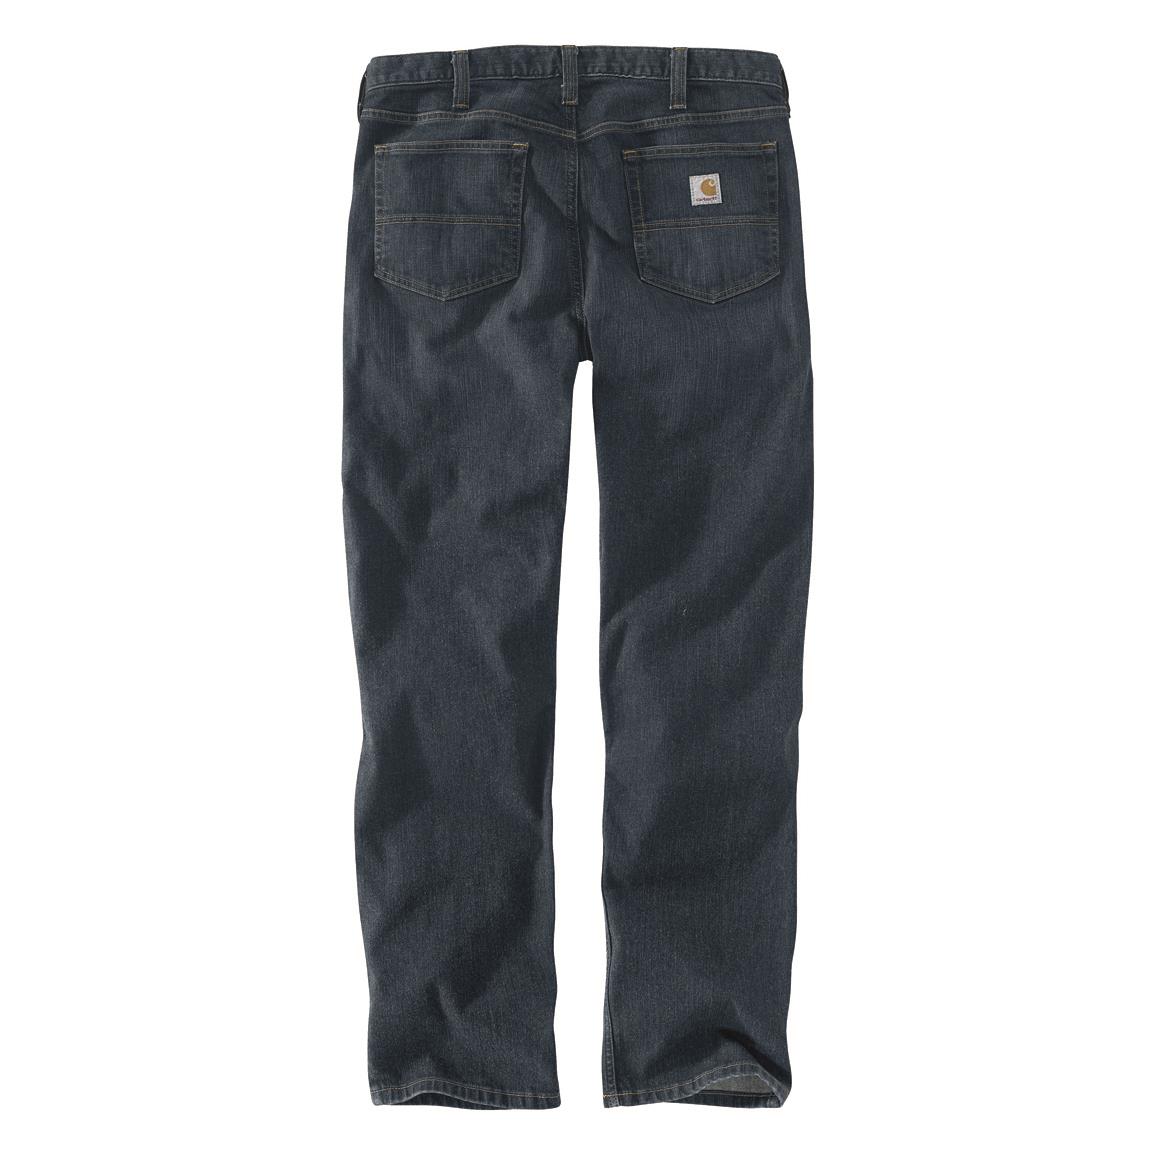 Carhartt Men's Rugged Flex Relaxed Fit Straight Leg Jeans - 700855 ...